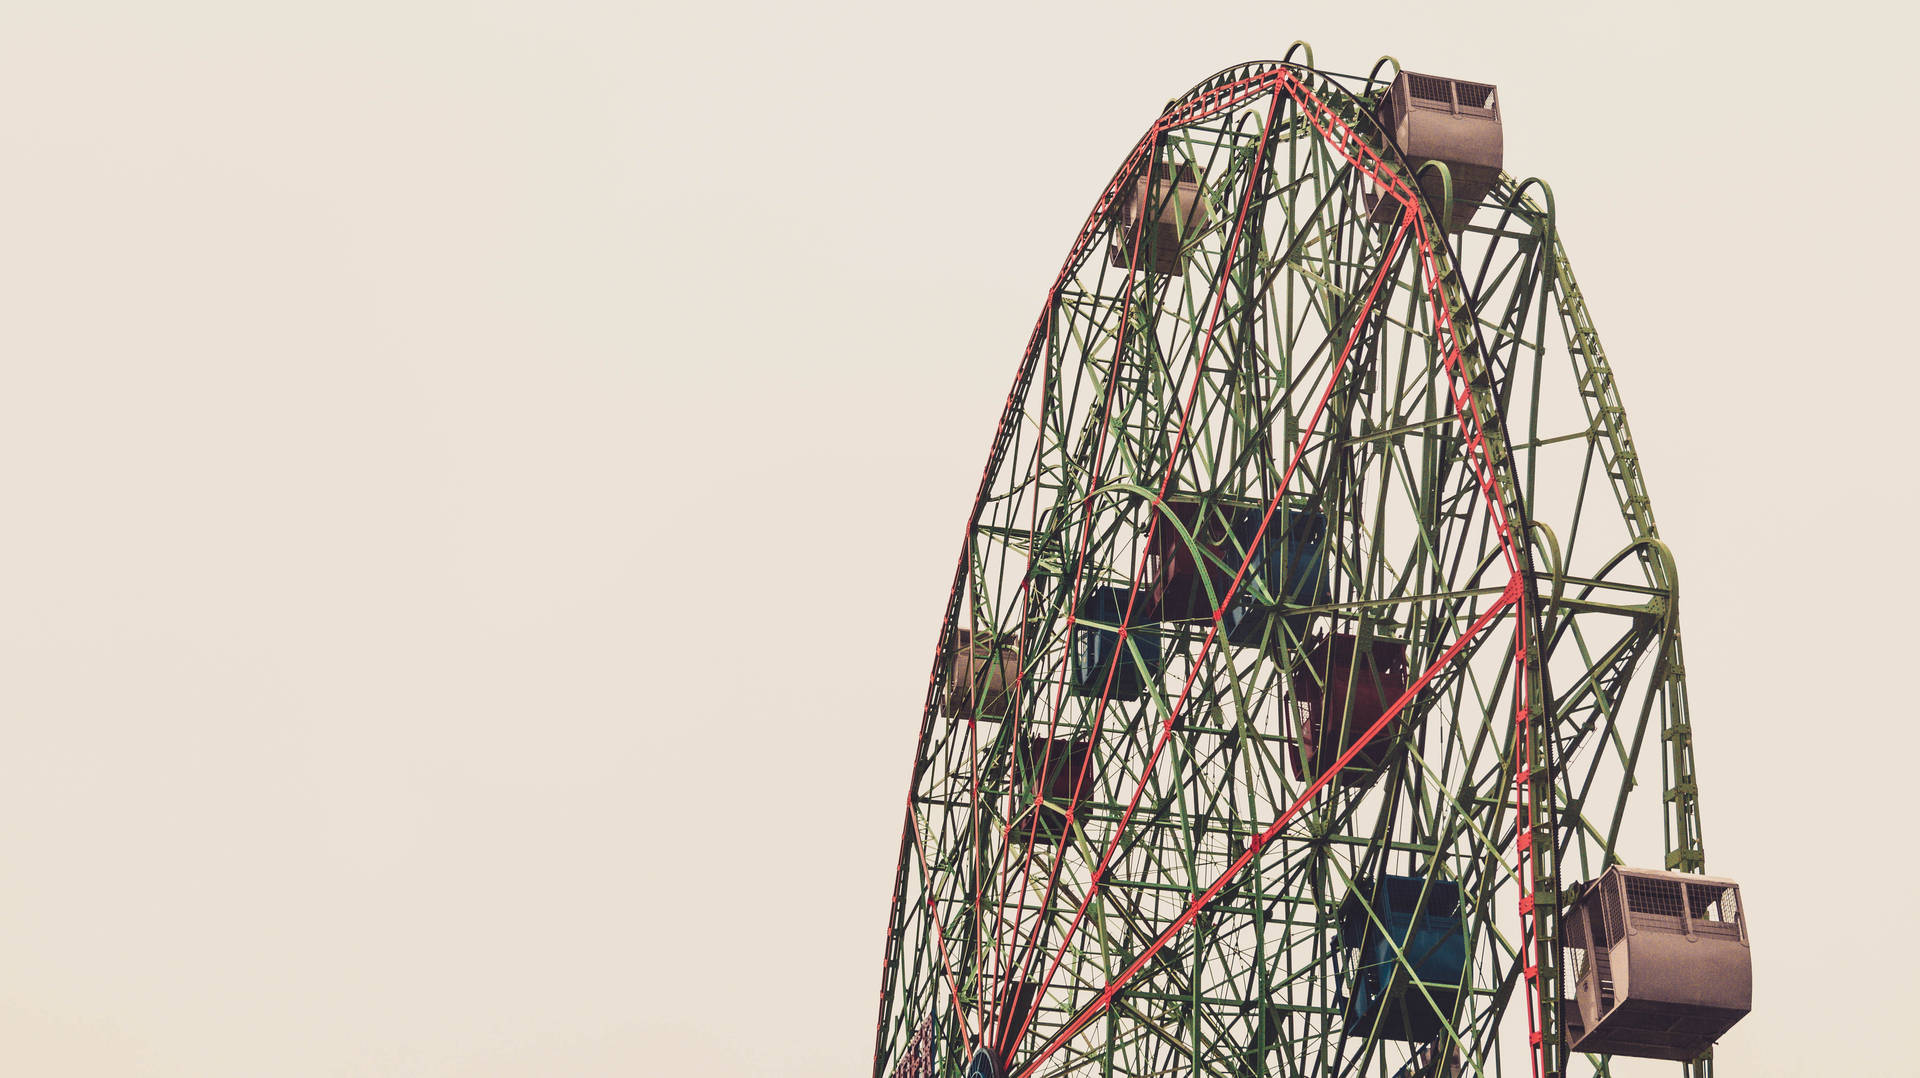 Theme Park Ferris Wheel Wallpaper